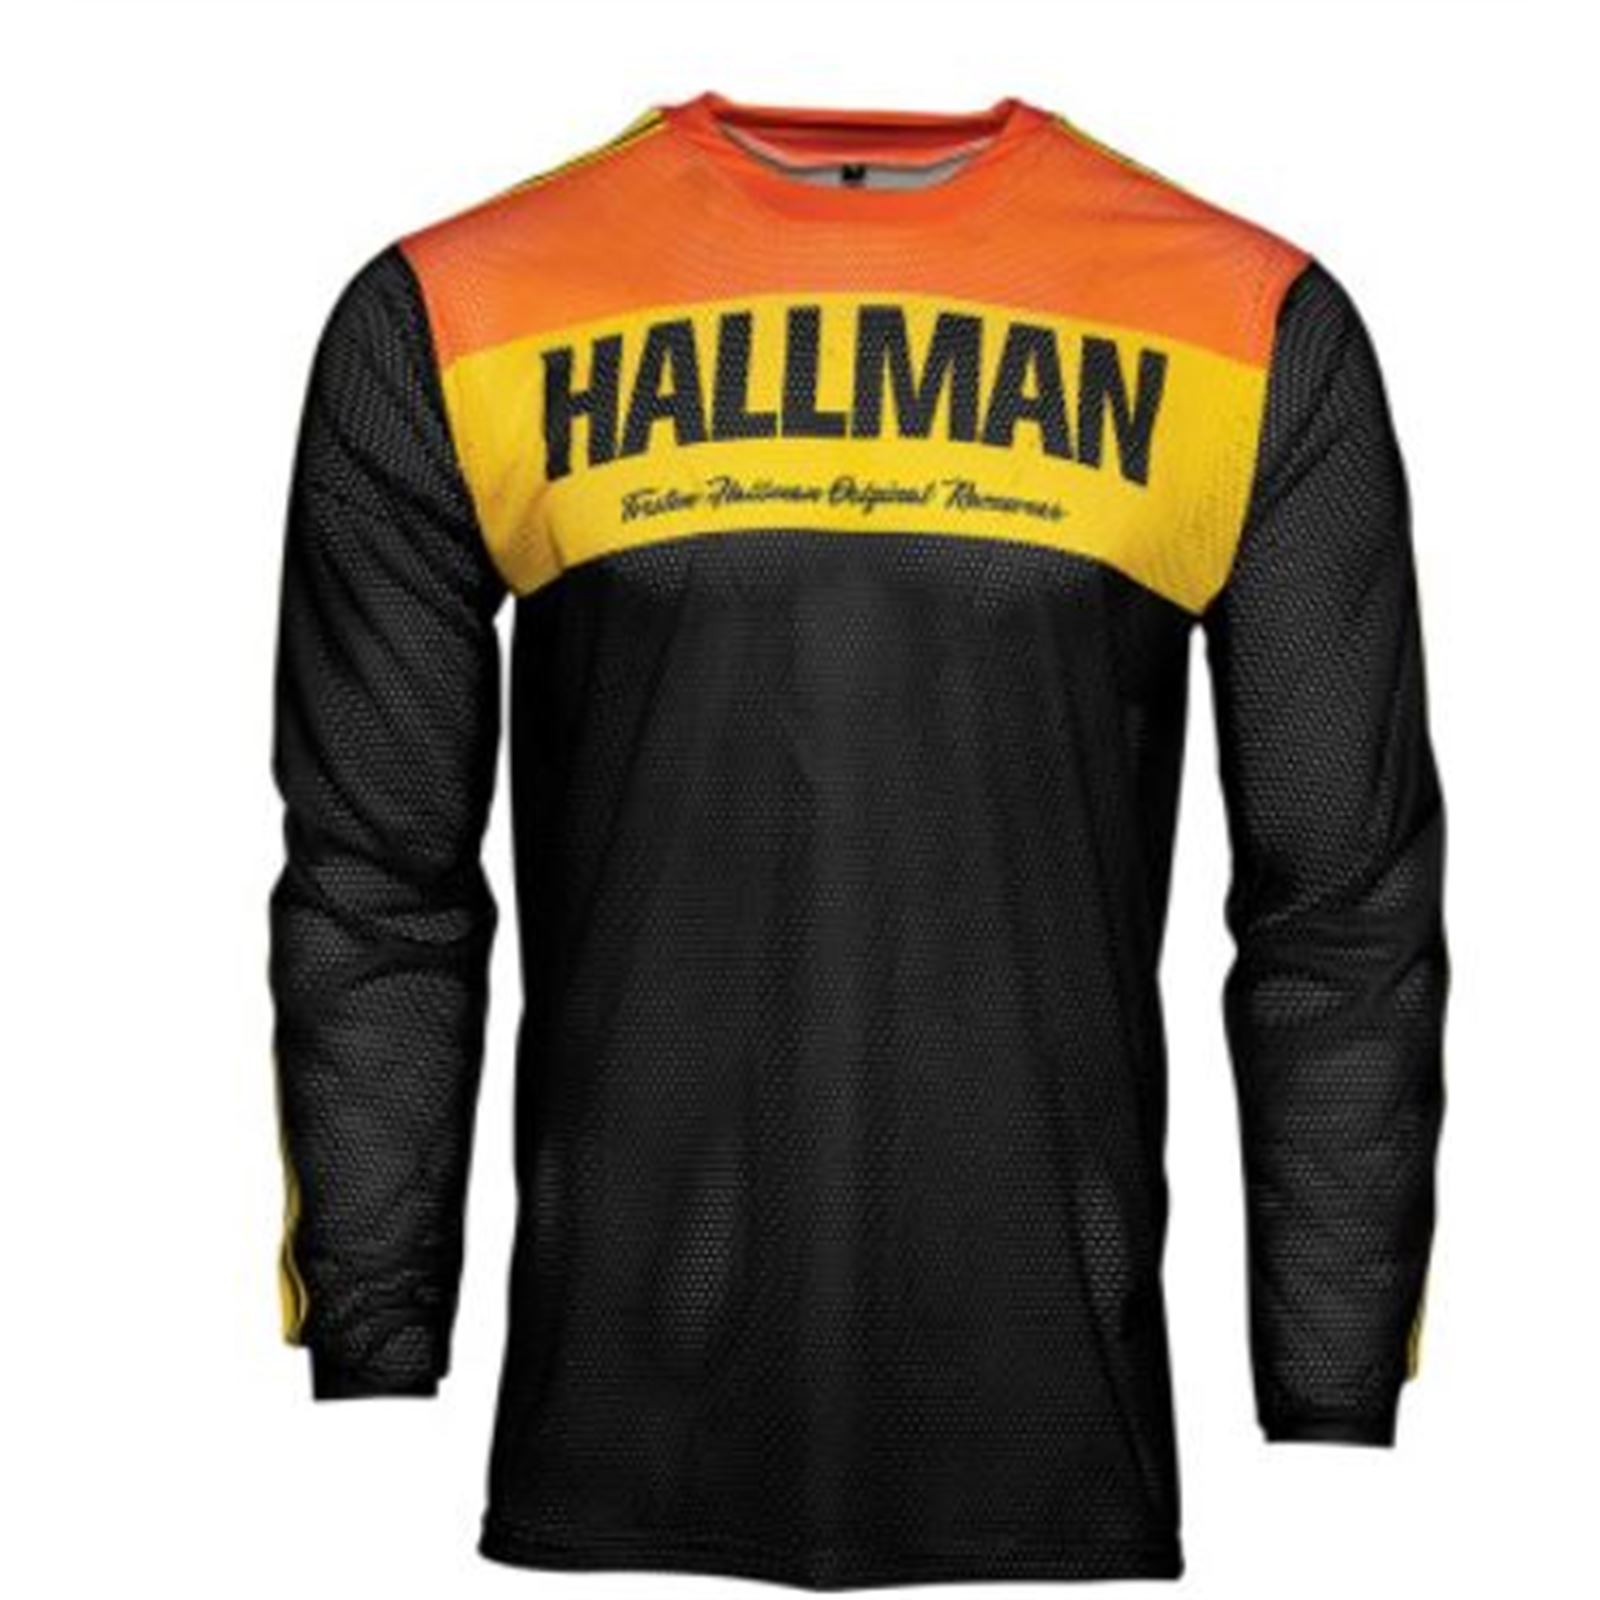 Thor Hallman Air Jersey - Black/Orange - Medium